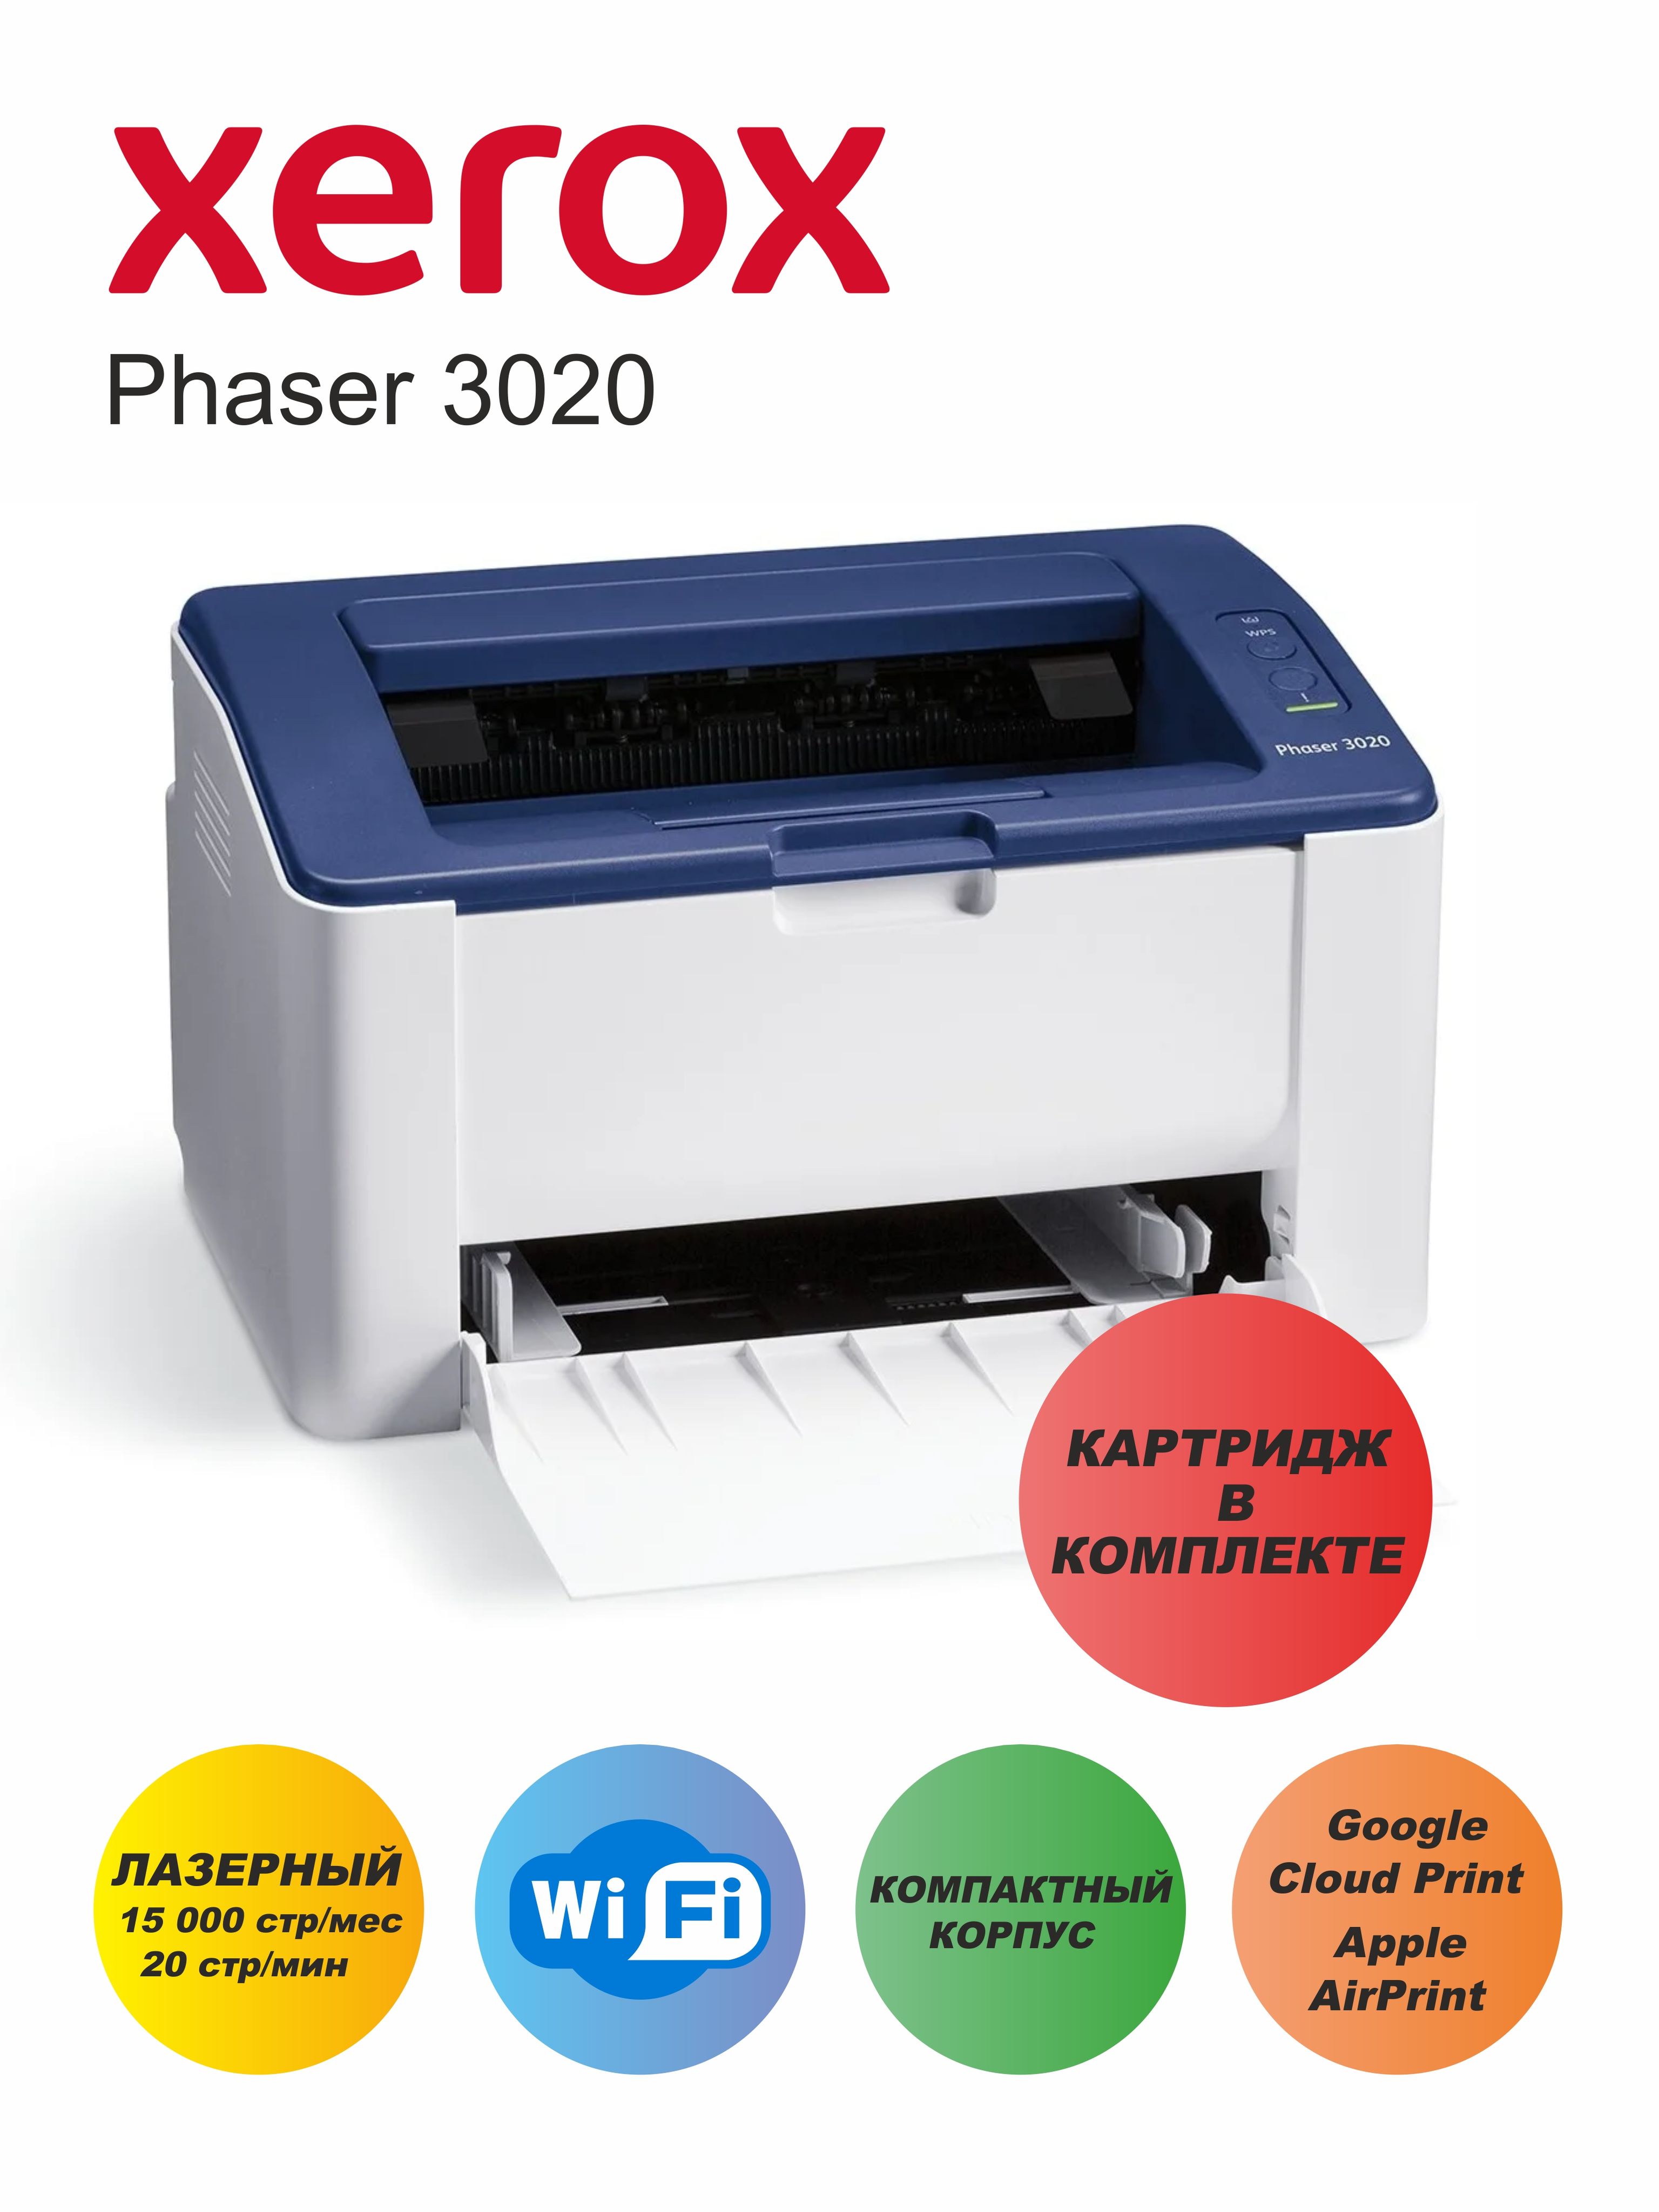 Принтер phaser 3020 купить. Xerox Phaser 3020. Принтер Phaser 3020. Xerox 3350. Phaser 3020 инструкция.